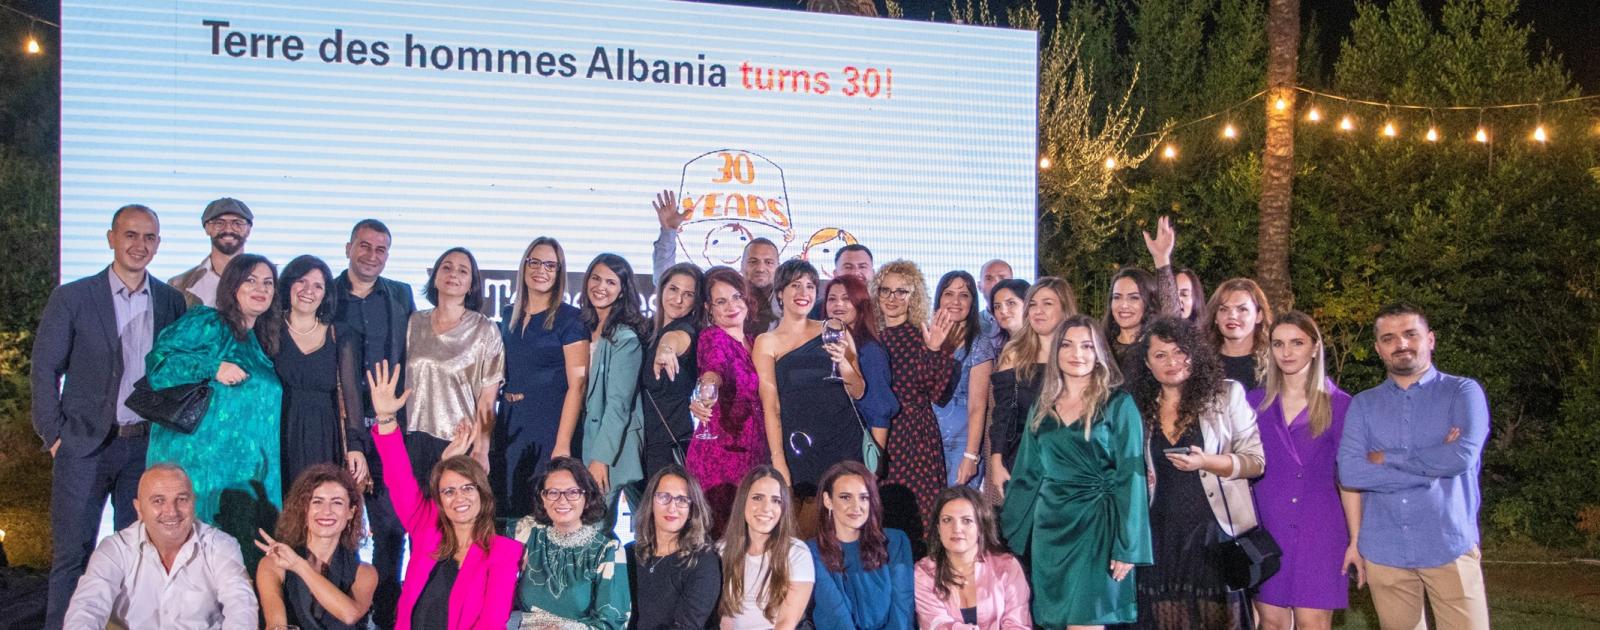 Terre des hommes Albania Celebrates its 30th Anniversary!